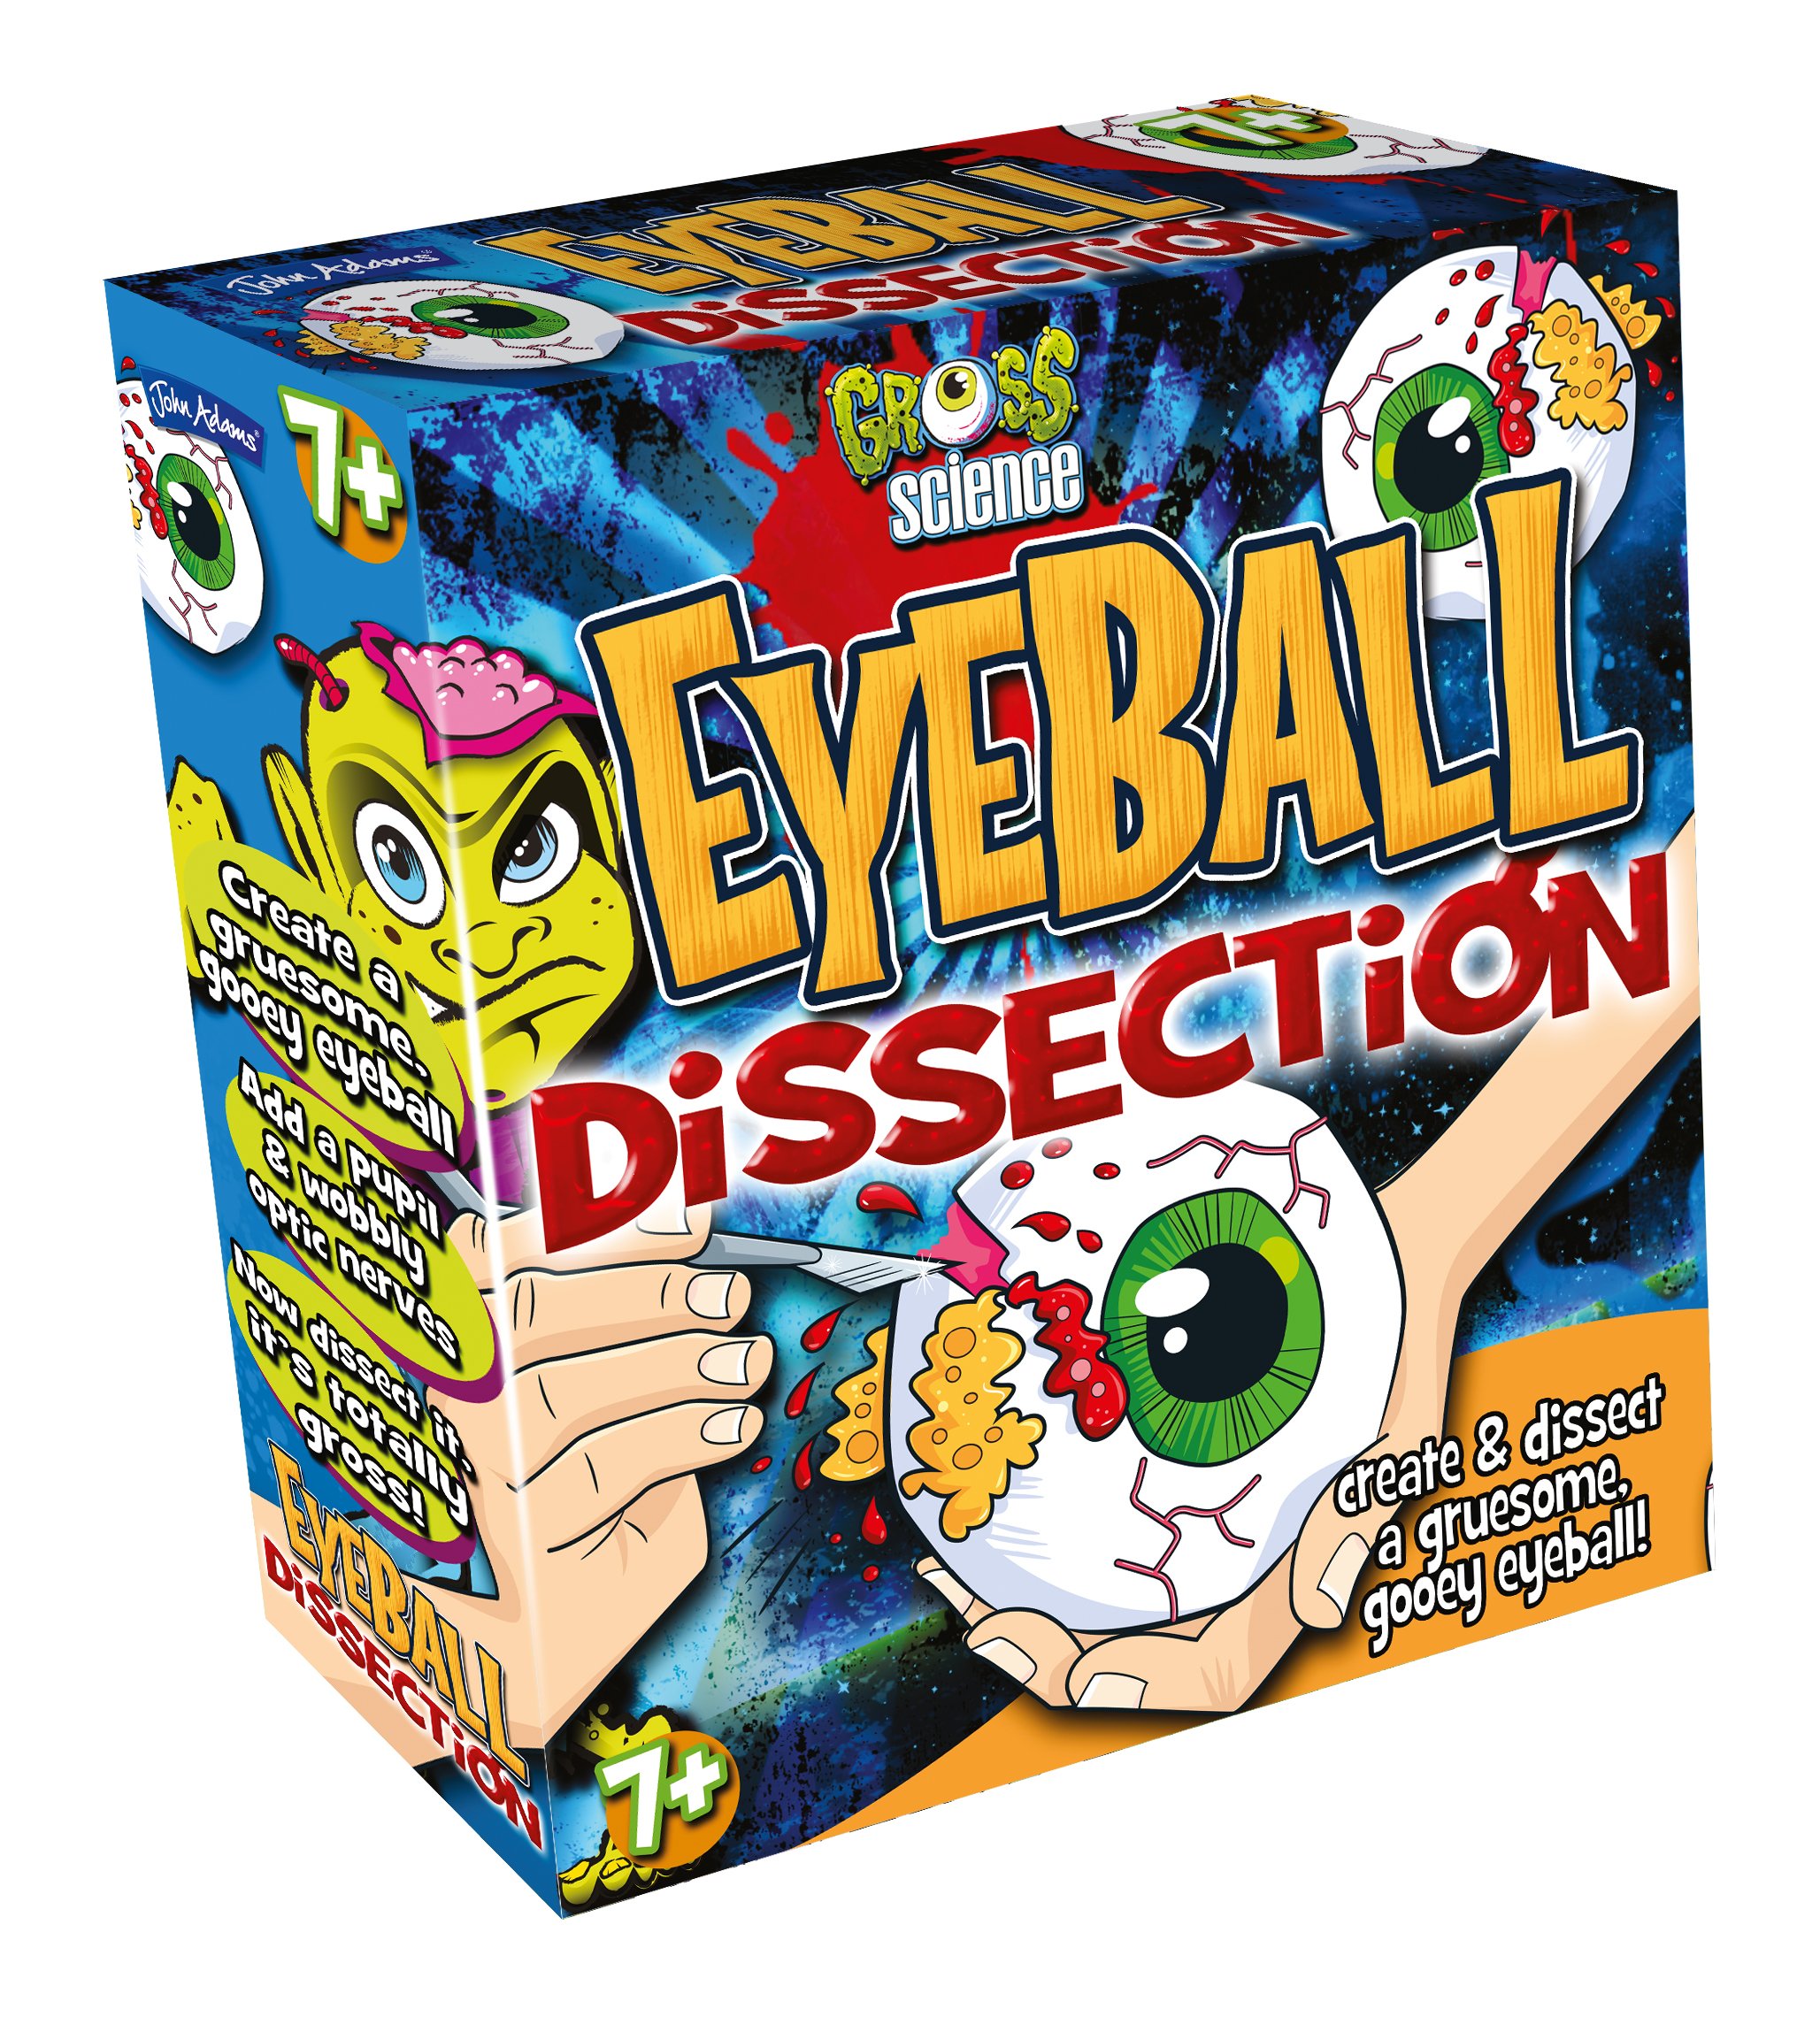 Gross Science Eye Preparation Kit